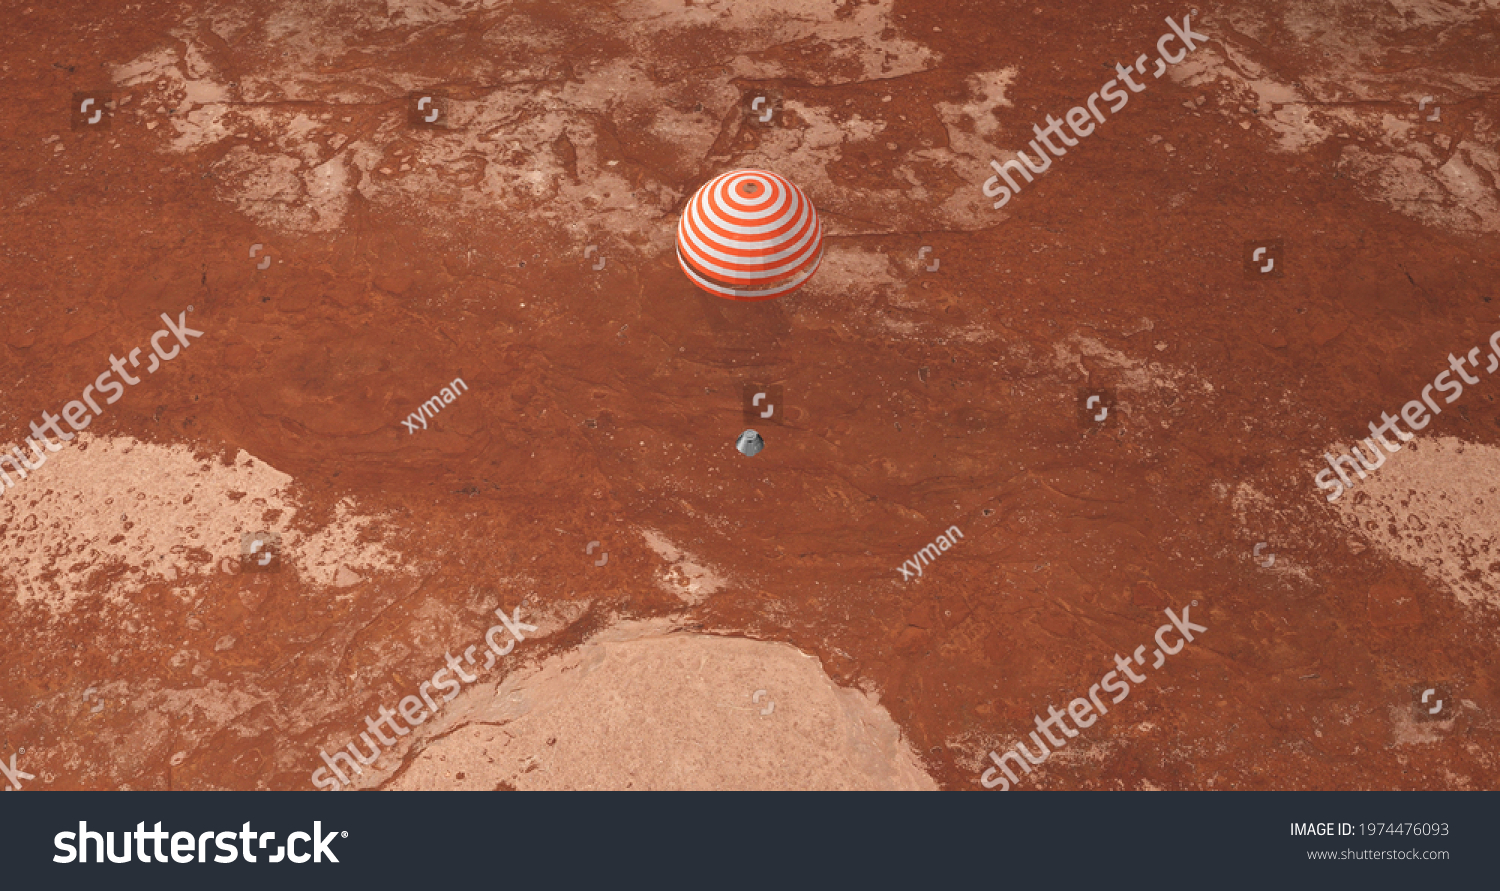 Spaceship landing on Mars with parachute #1974476093